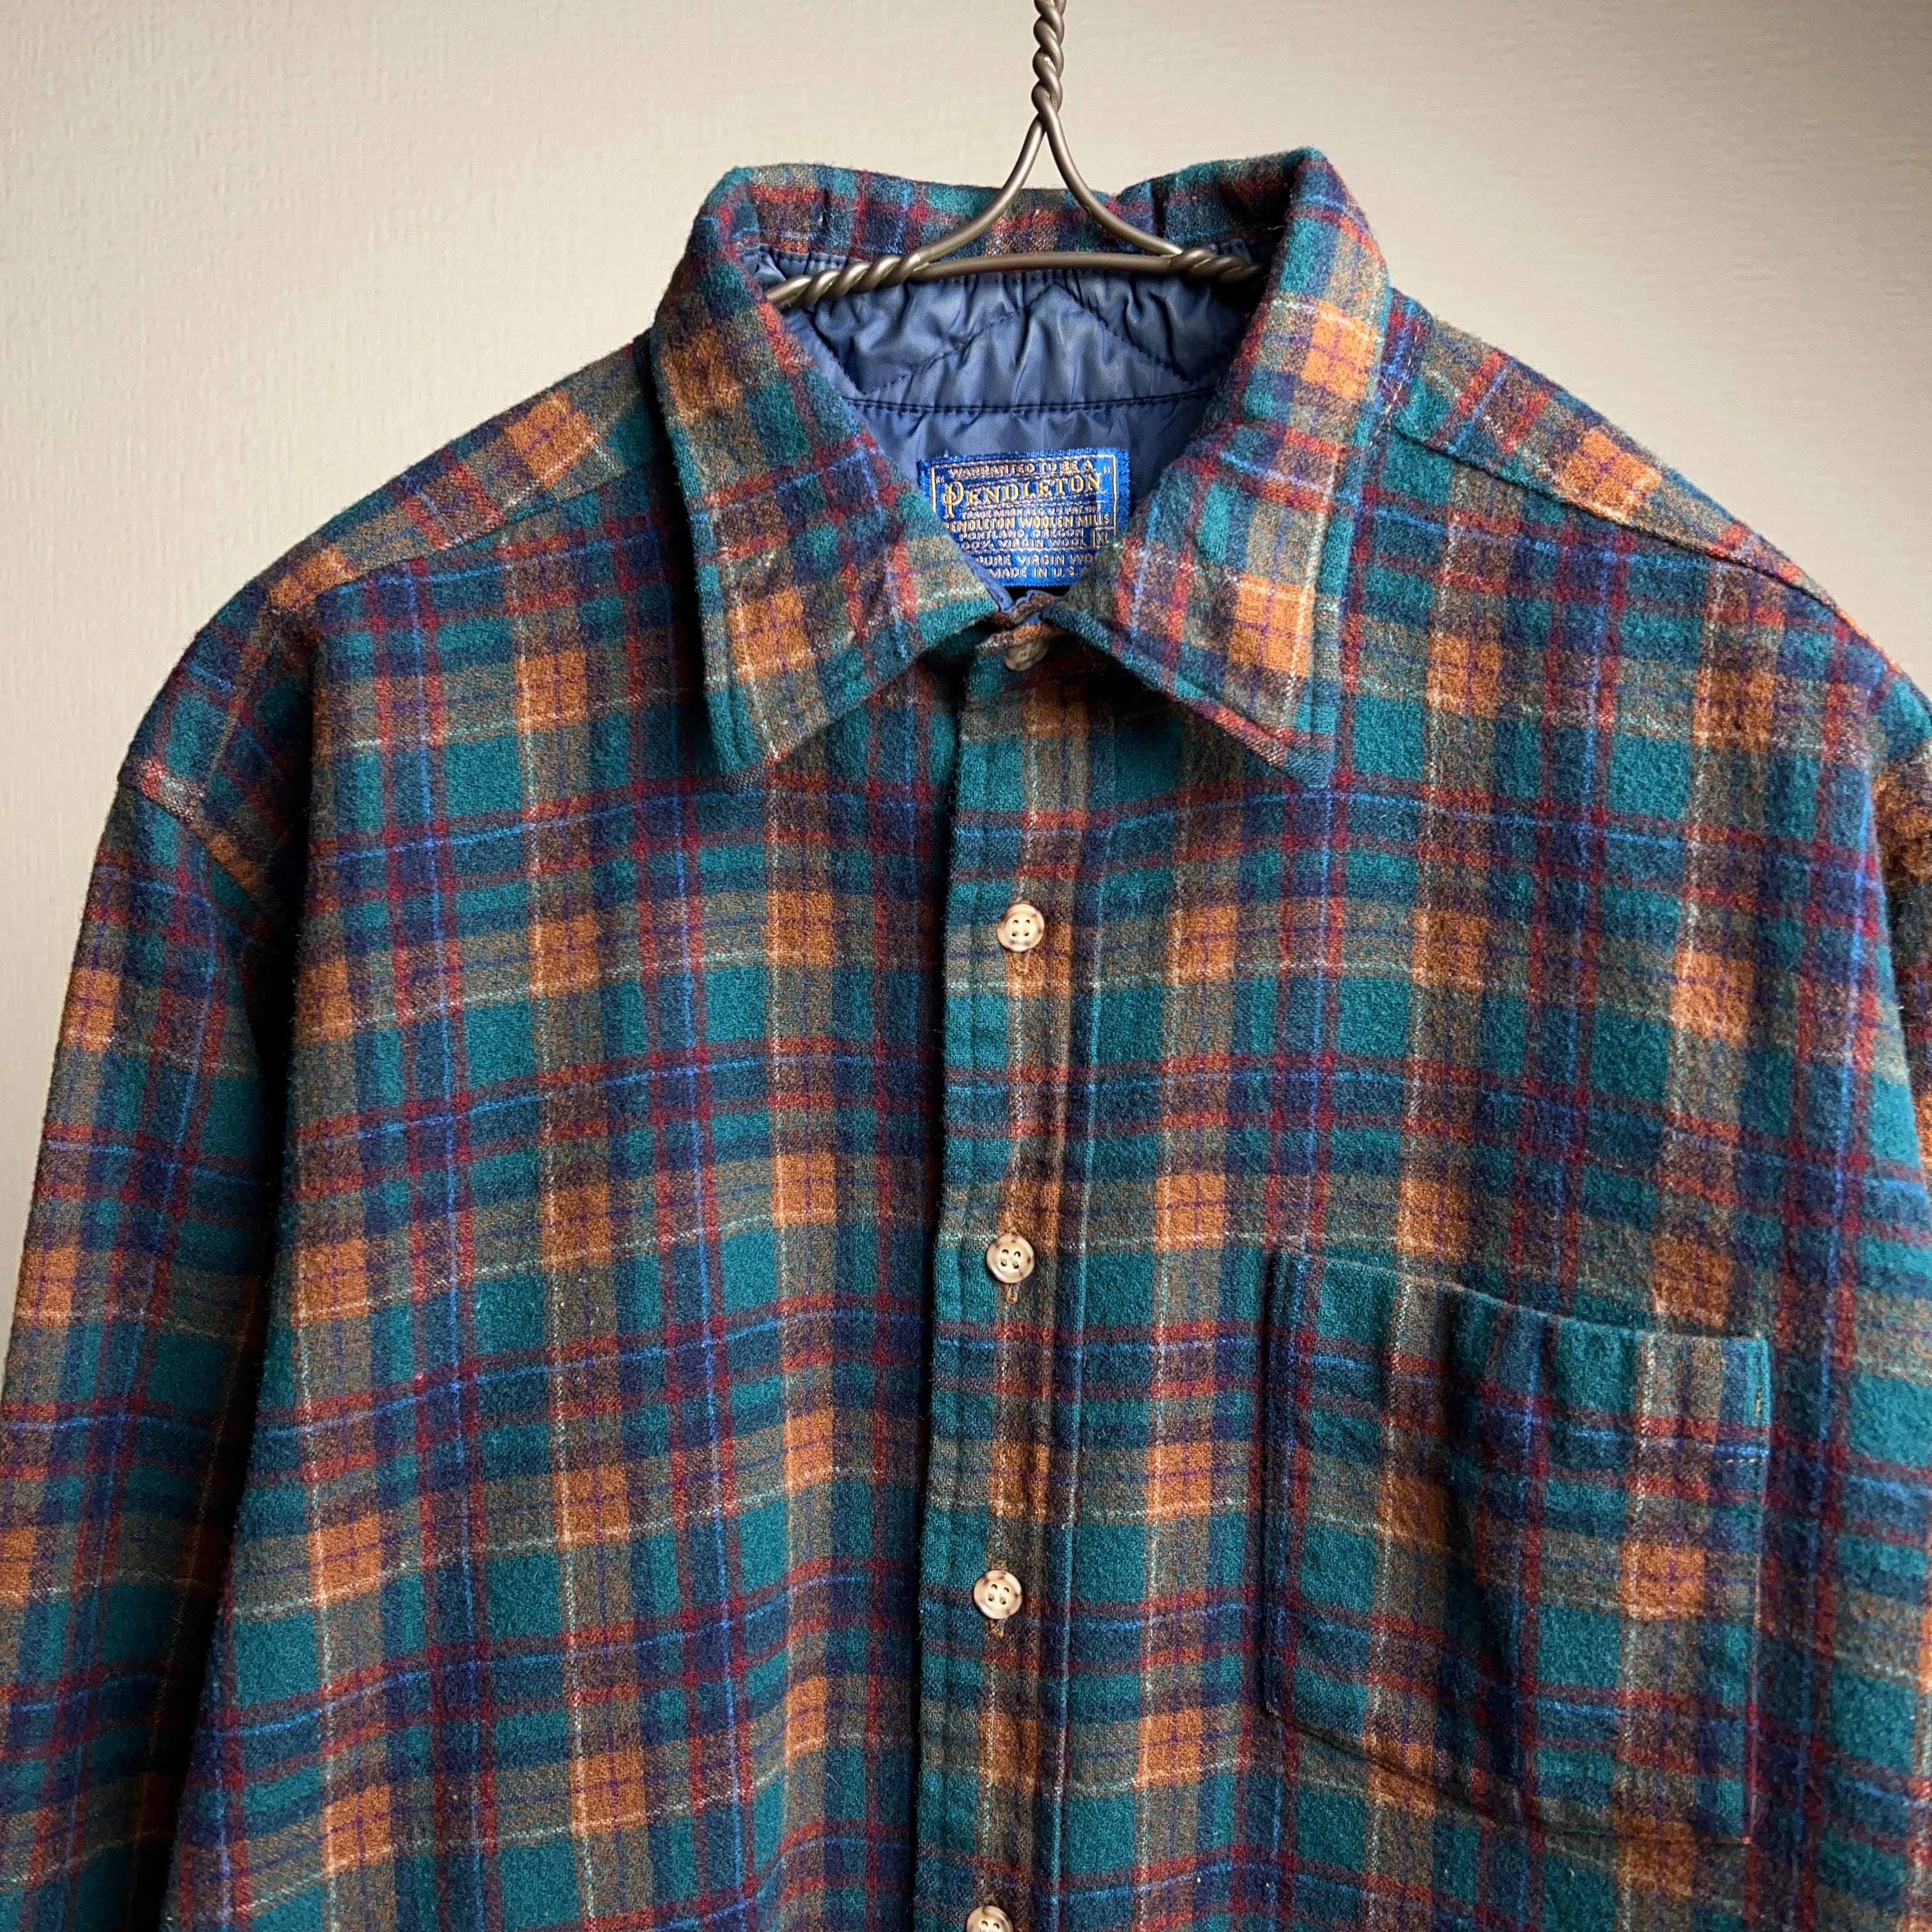 70's~80's “PENDLETON” Plaid Wool Shirt SIZE XL USA製 70年代 80年代